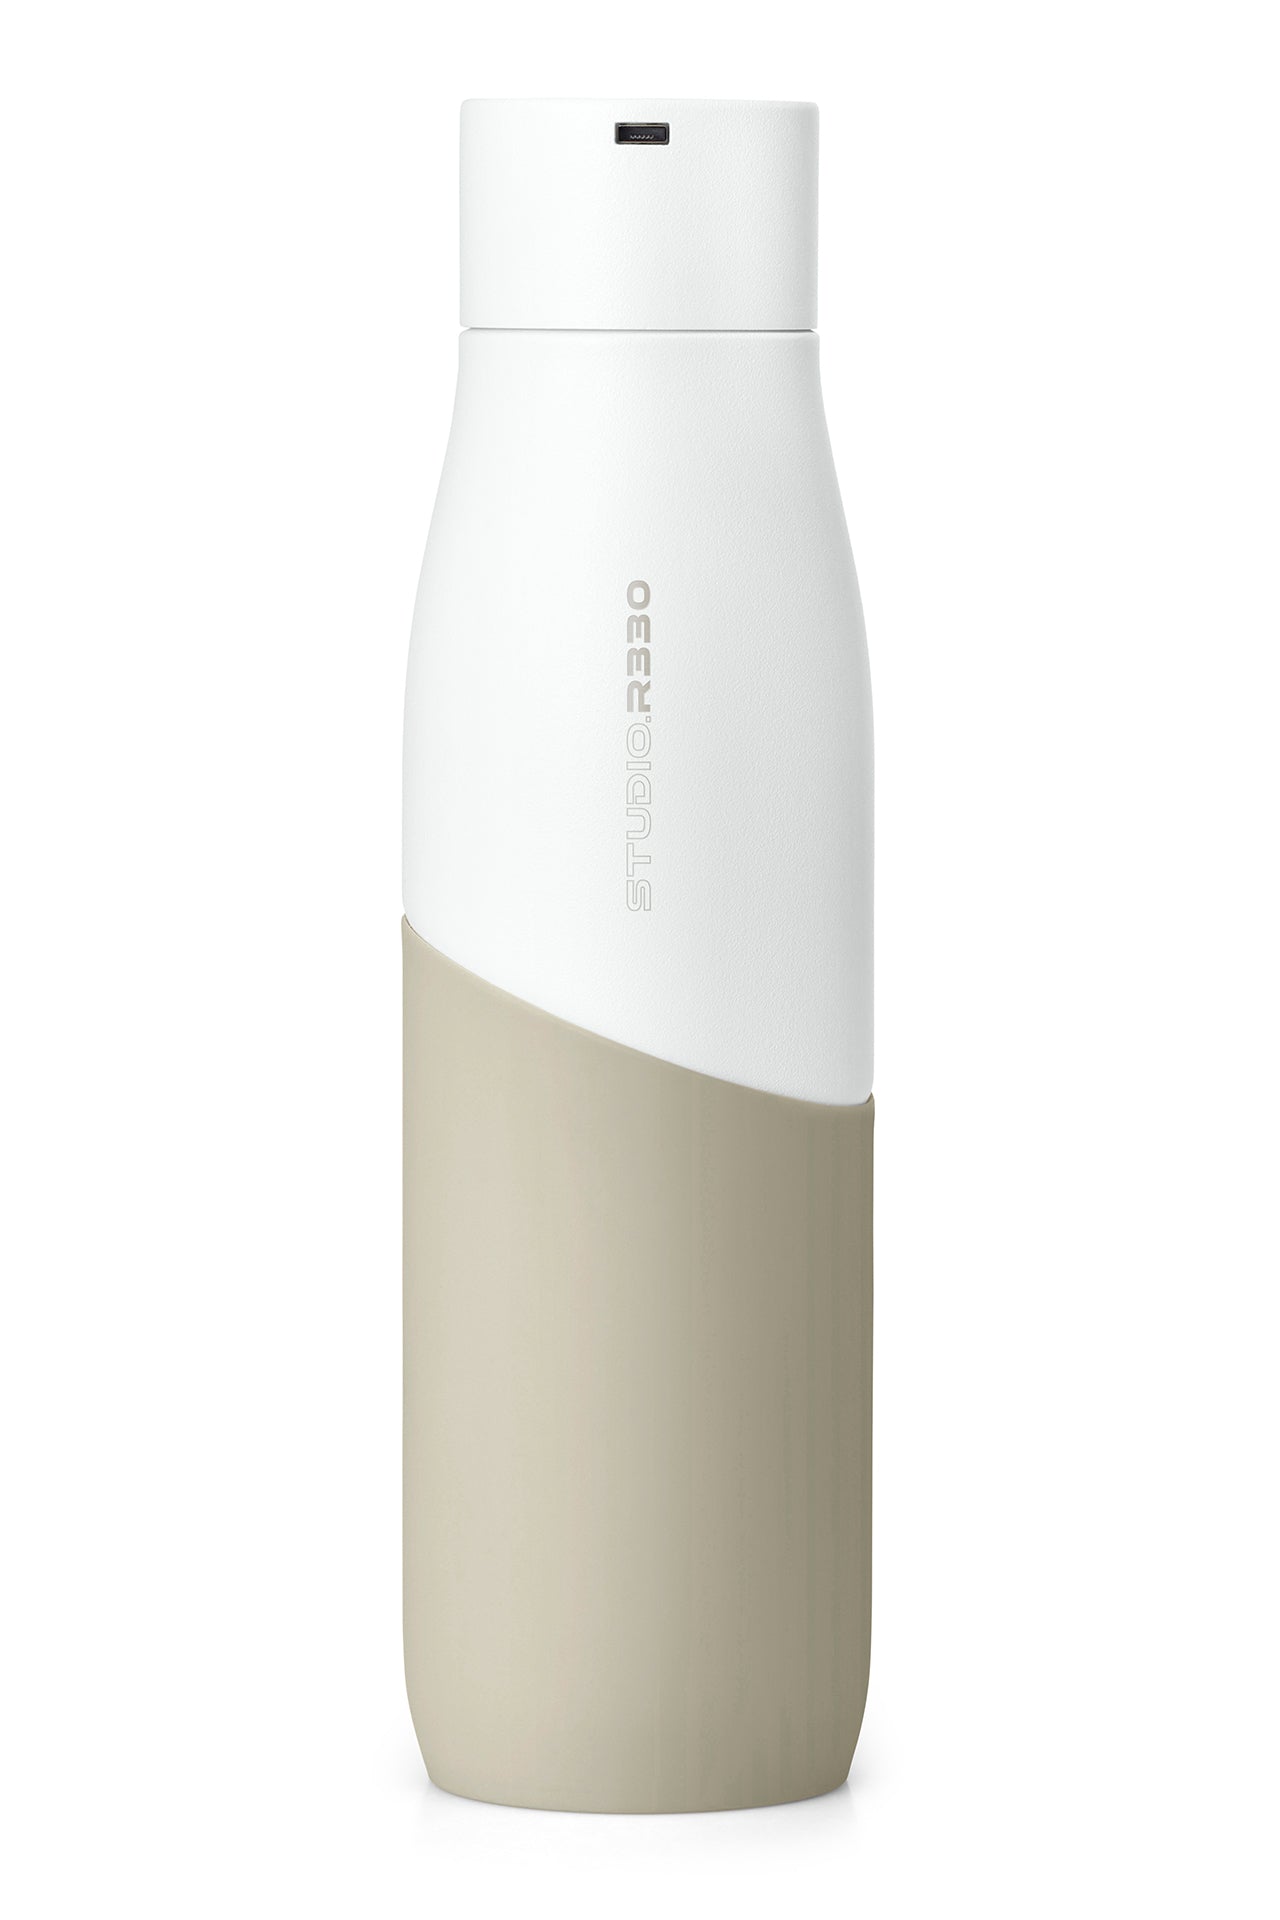 LARQ x R330 Bottle 